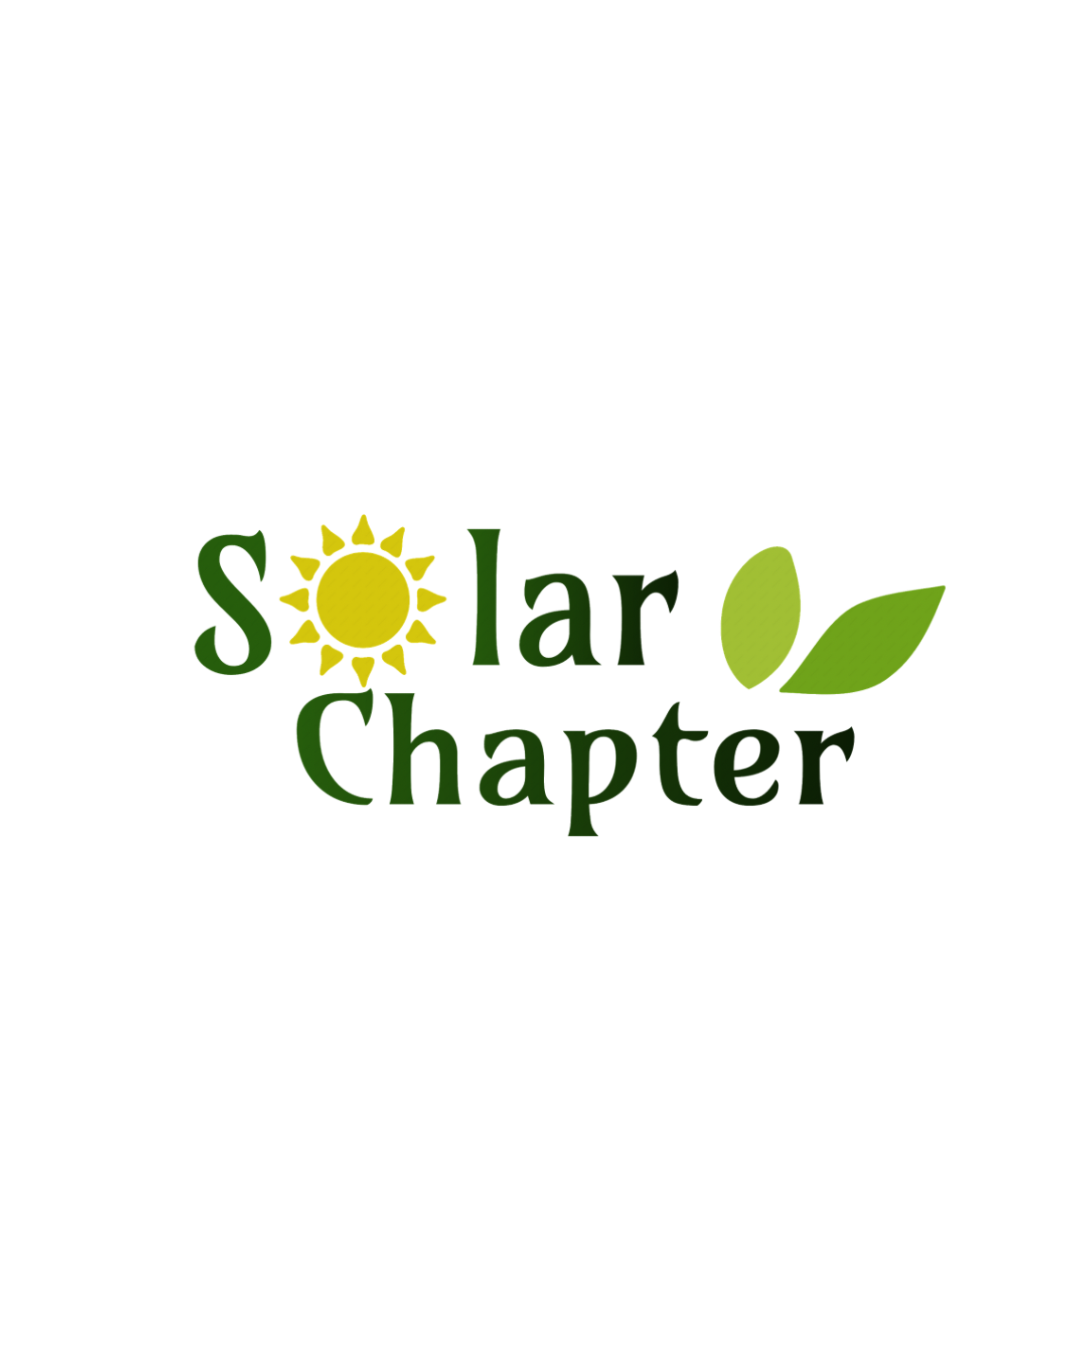 Solar Chapter